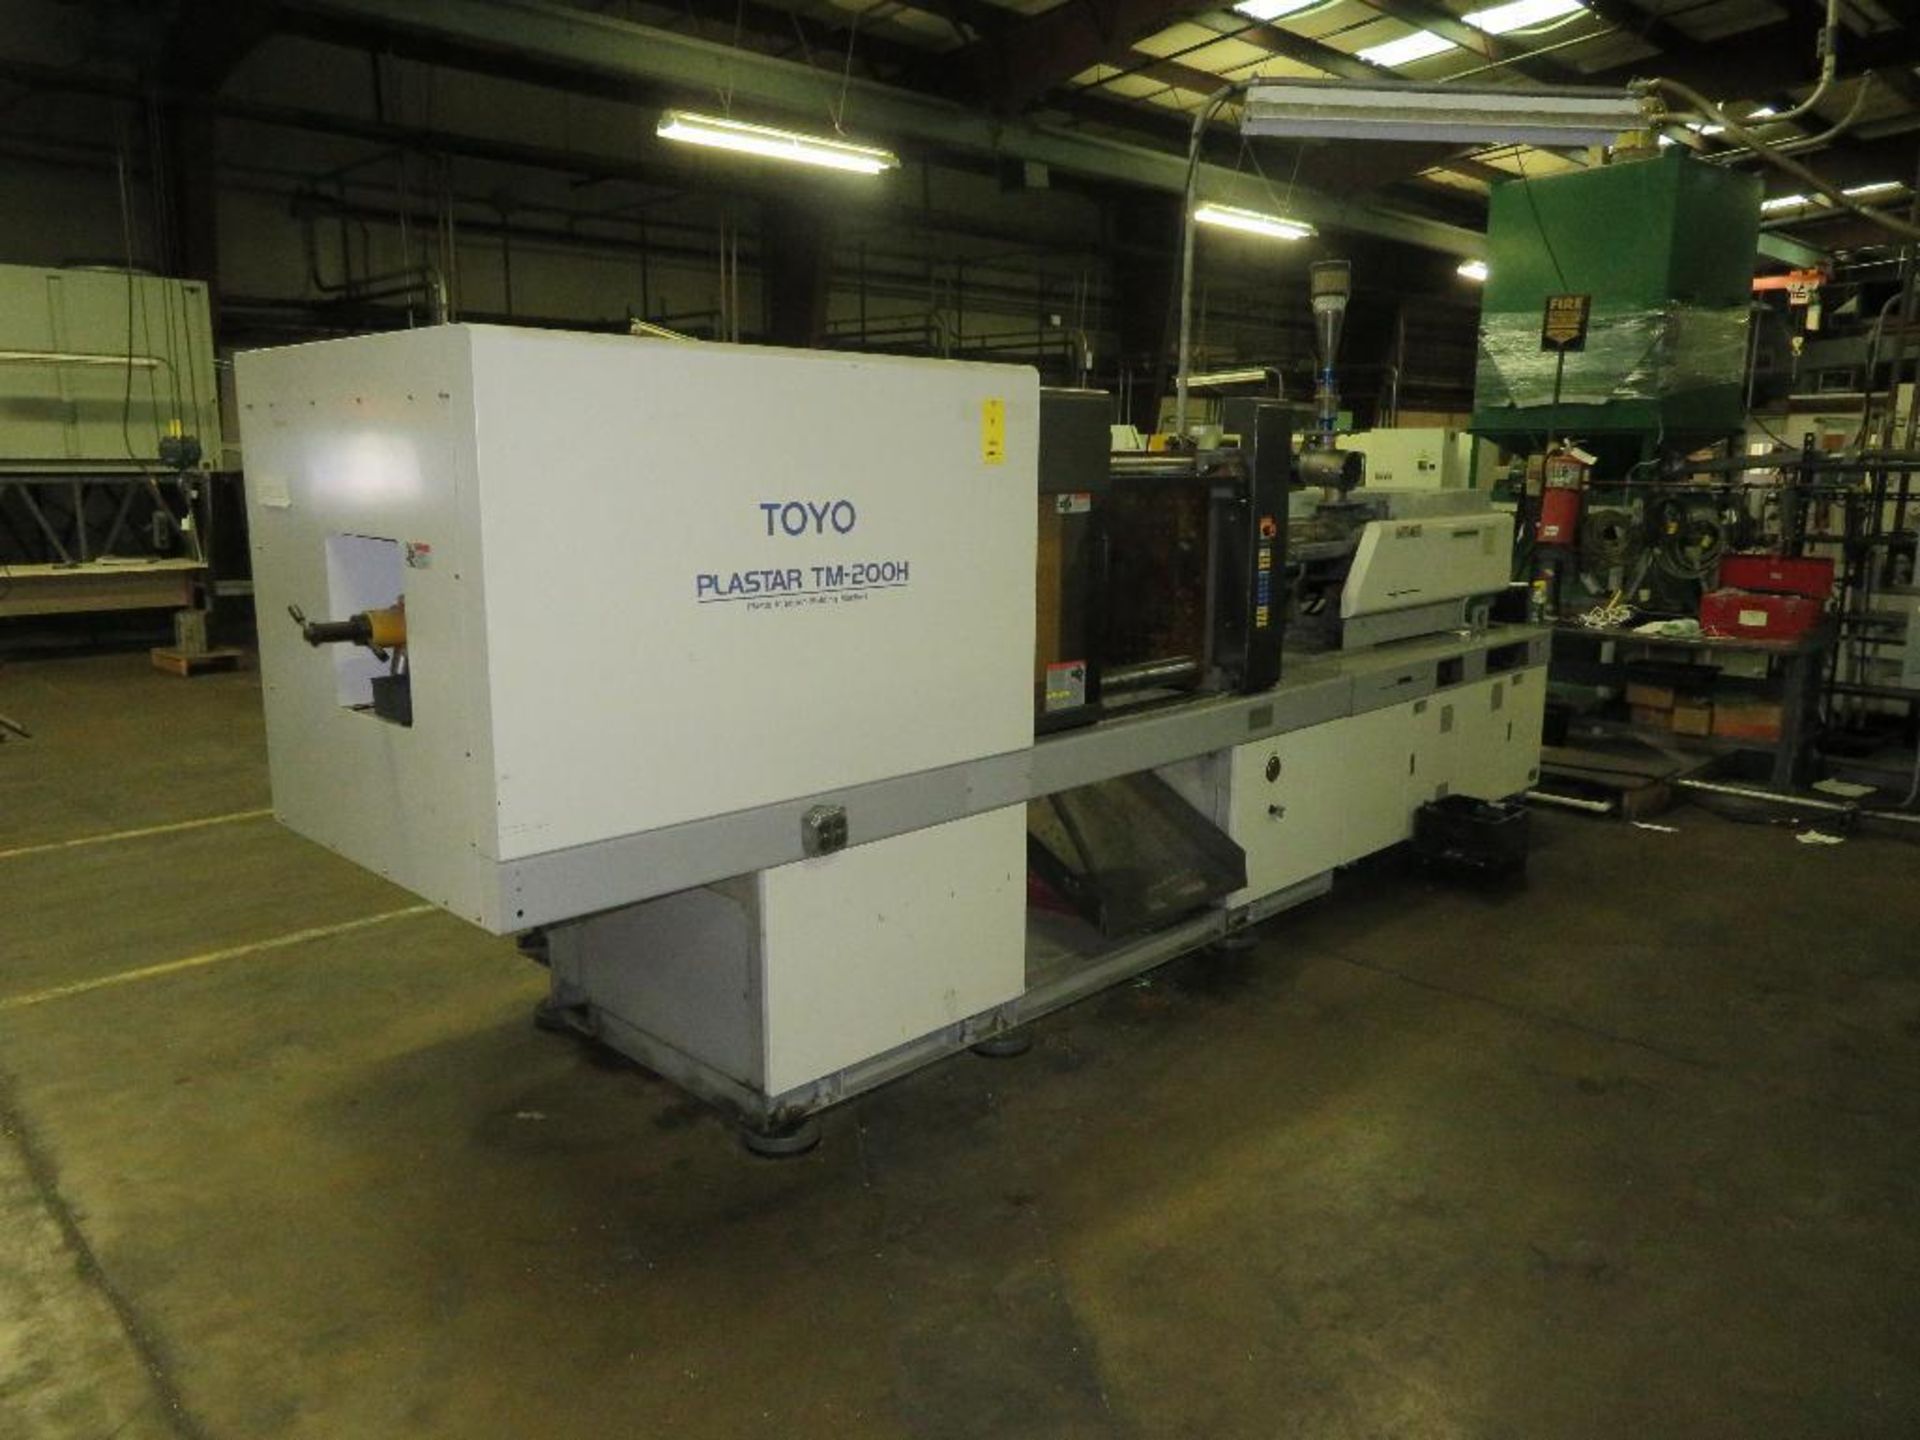 Toyo 200 Ton, 15.9 oz. Hydraulic Injection Molding Machine Model Plastar TM-200HVPS, S/N 1141248 (20